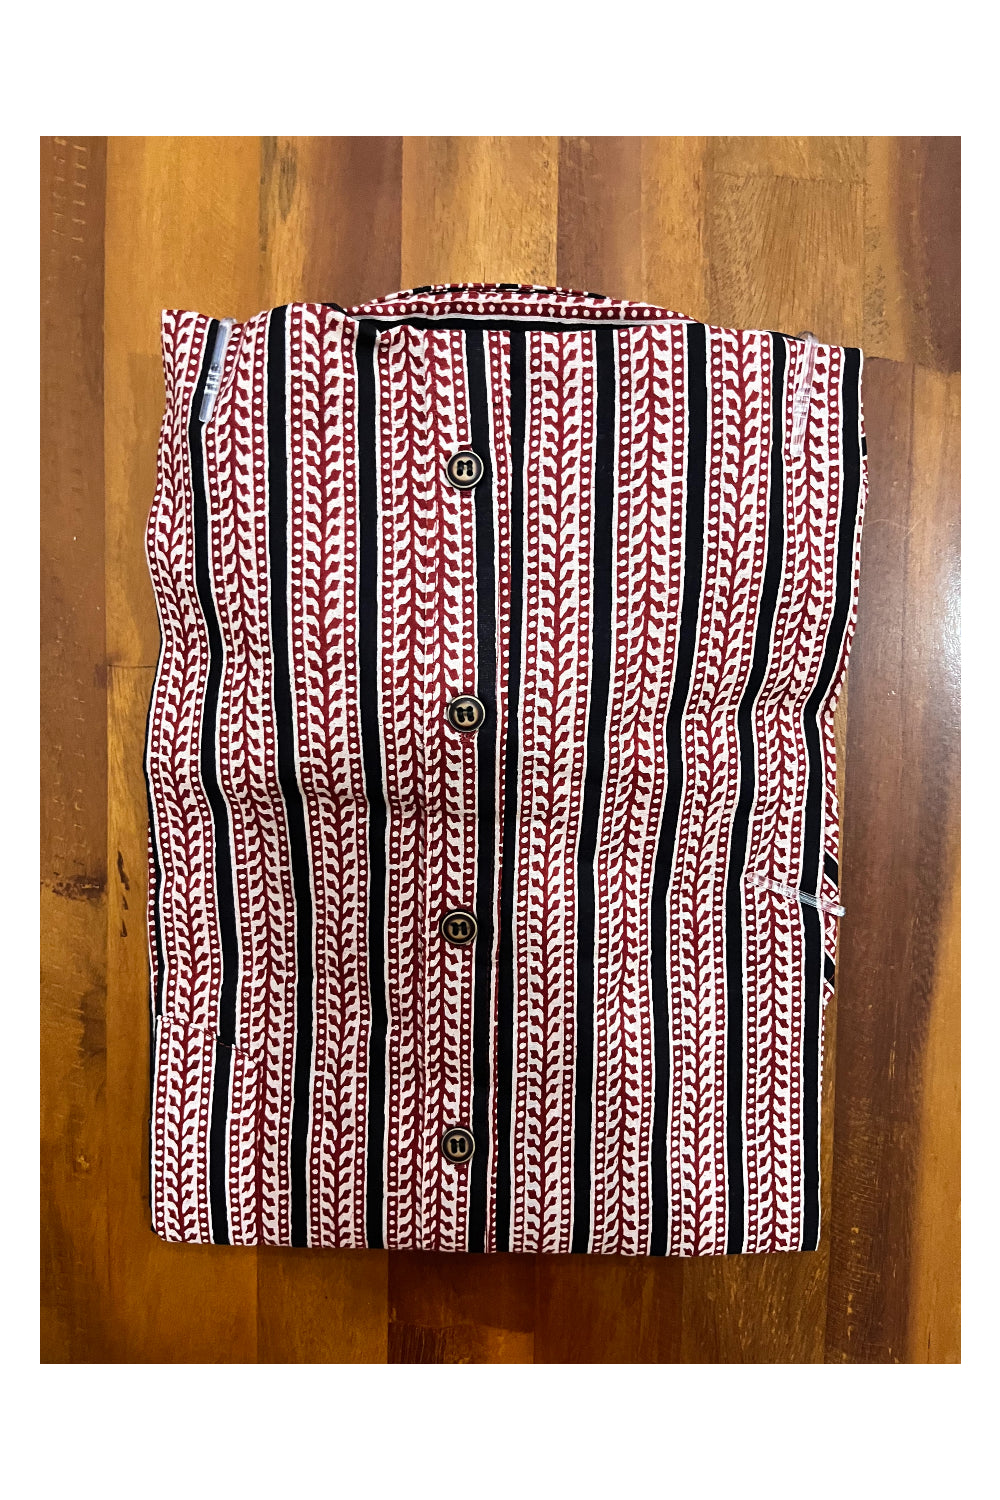 Southloom Jaipur Cotton Red Black Hand Block Printed Shirt (Half Sleeves)